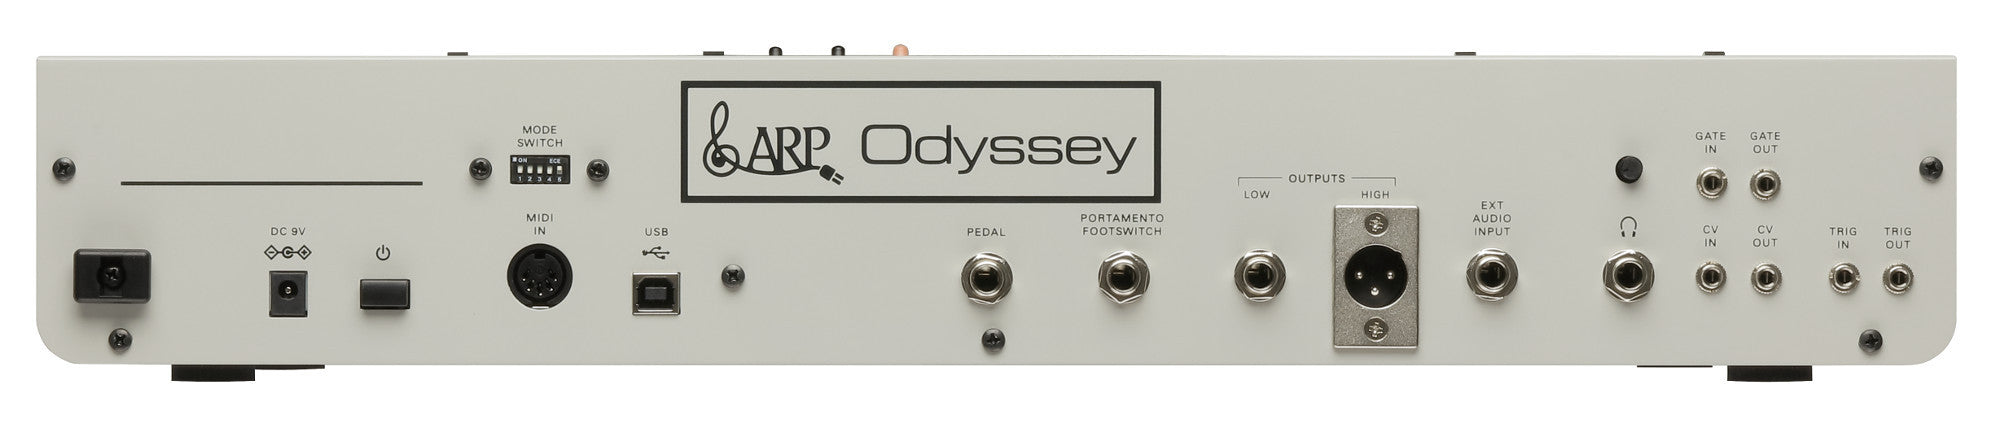 ARP Odyssey Module Rev1